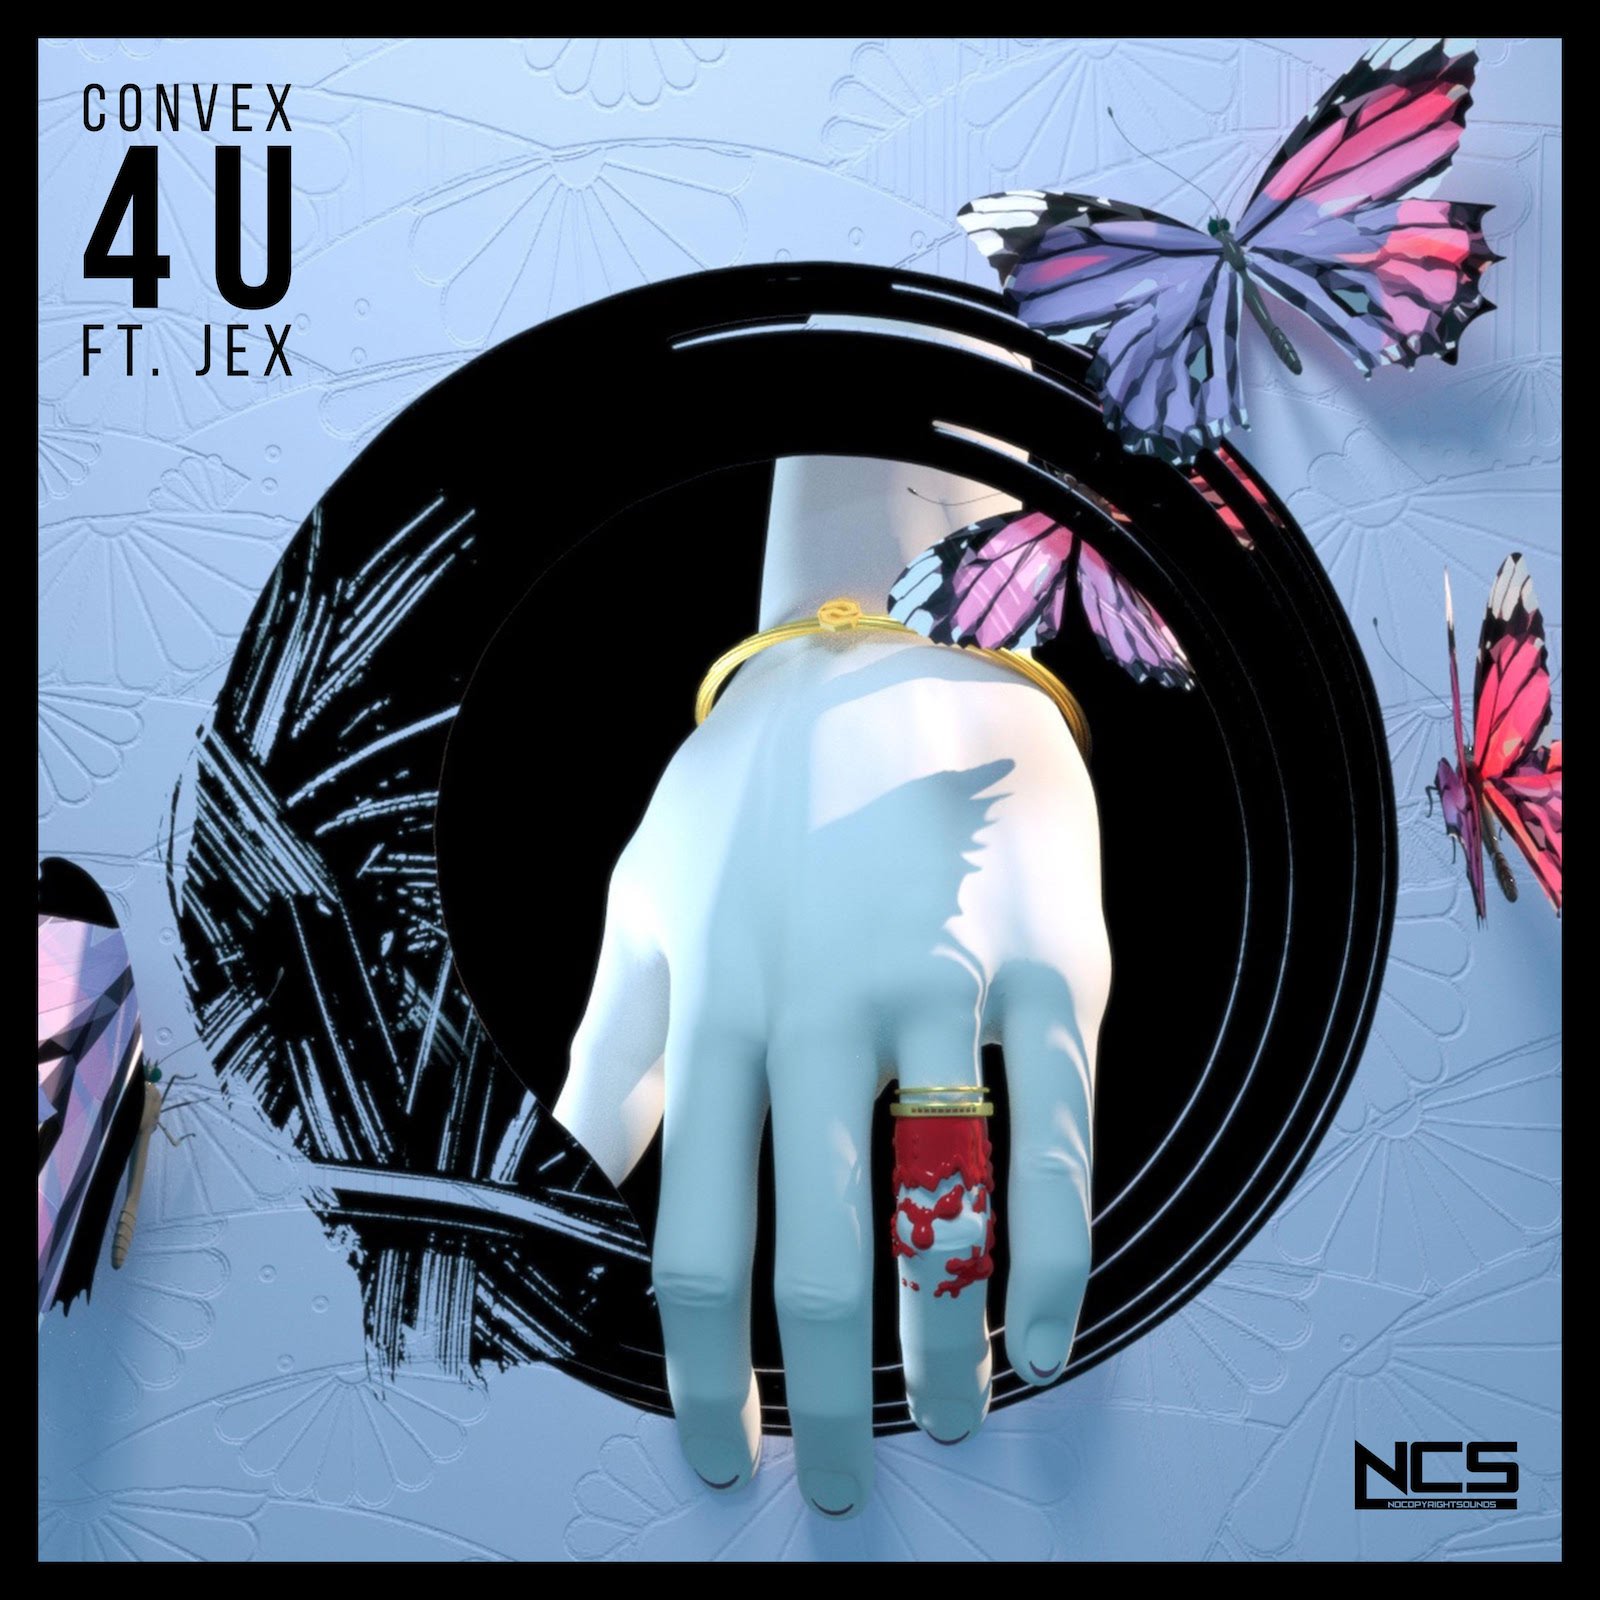 CONVEX 4U - Neon Owl